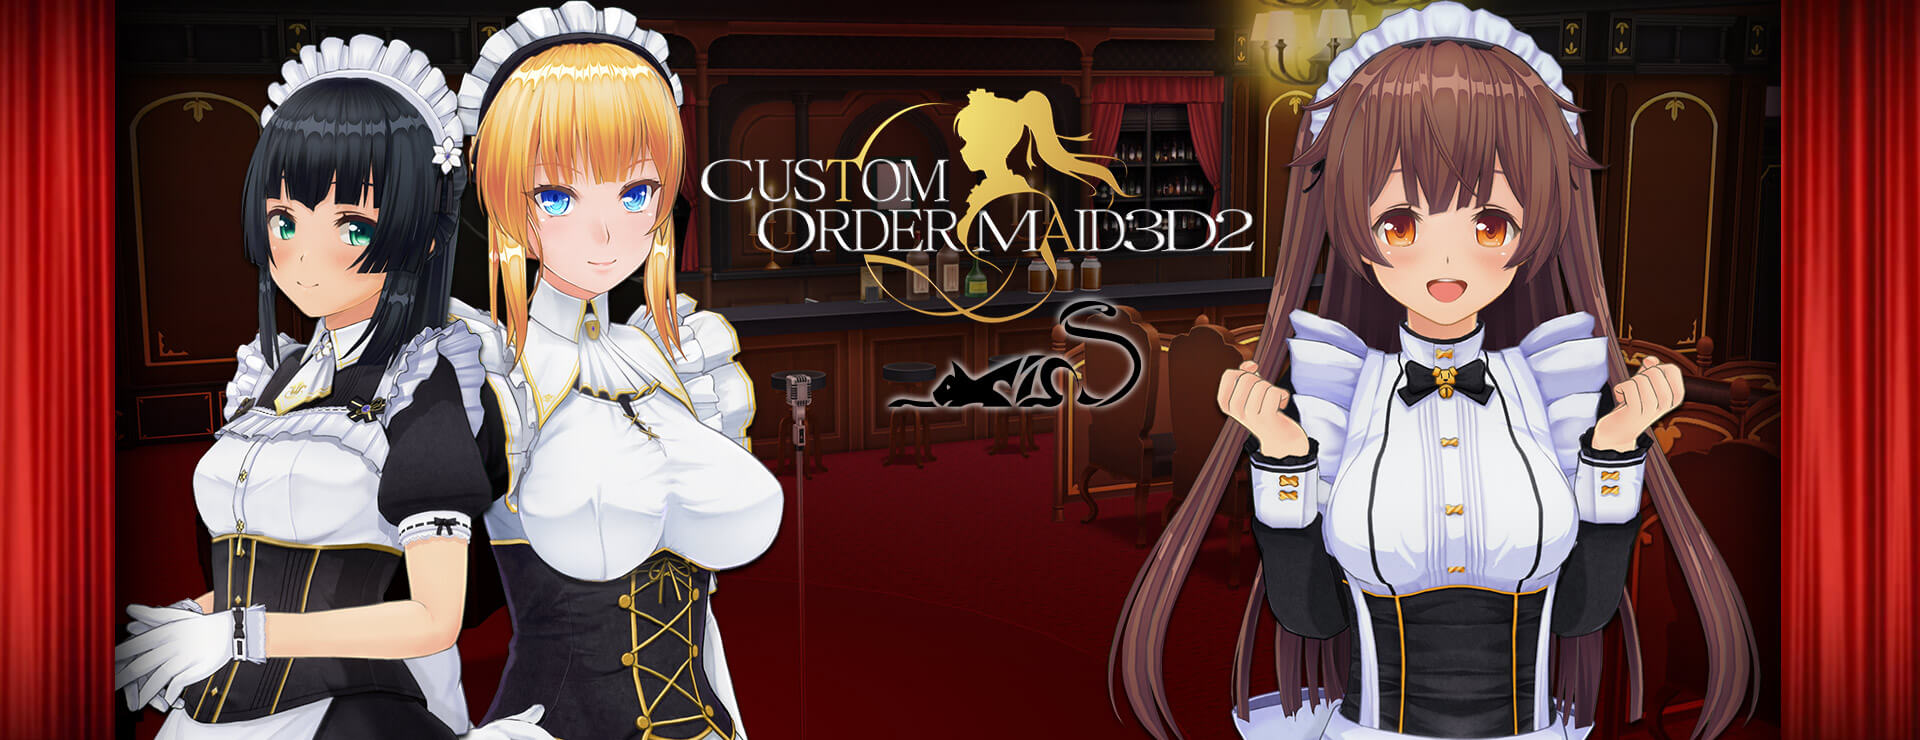 Custom Order Maid 3D2 - It's a Night Magic Premium Empire Bundle - Simulation Jeu